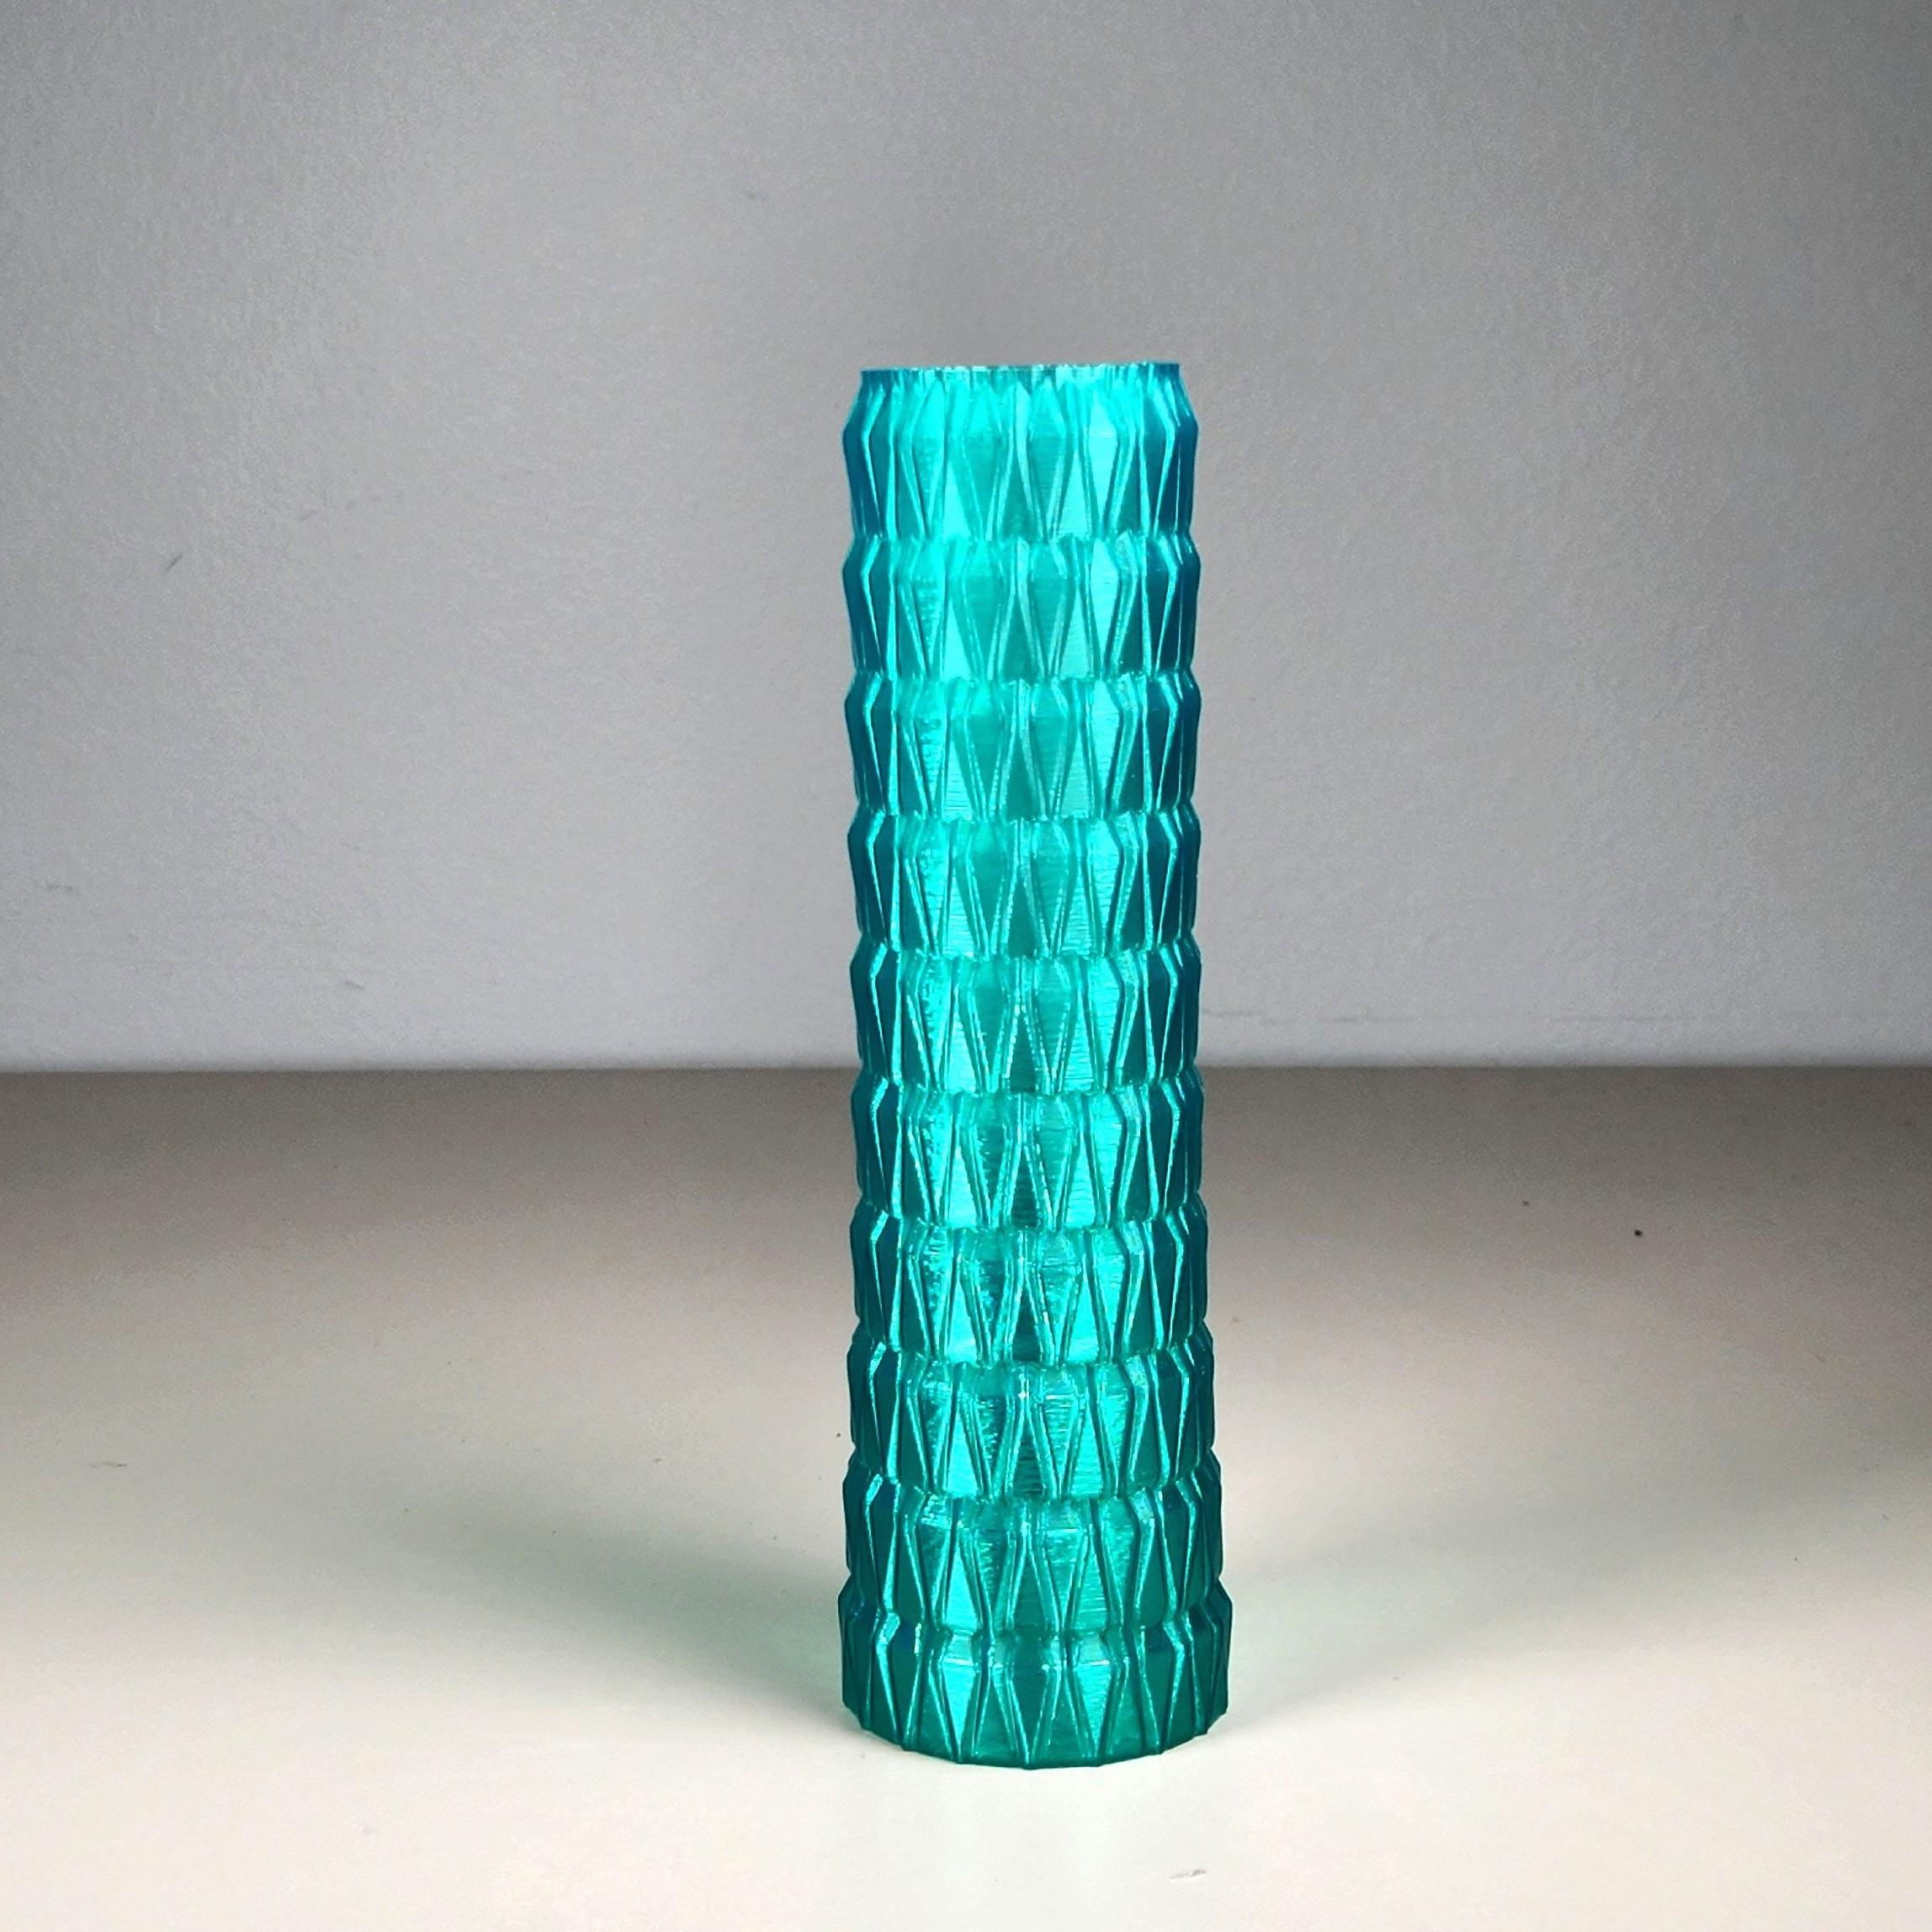 Straight multifaceted Vase 3d model